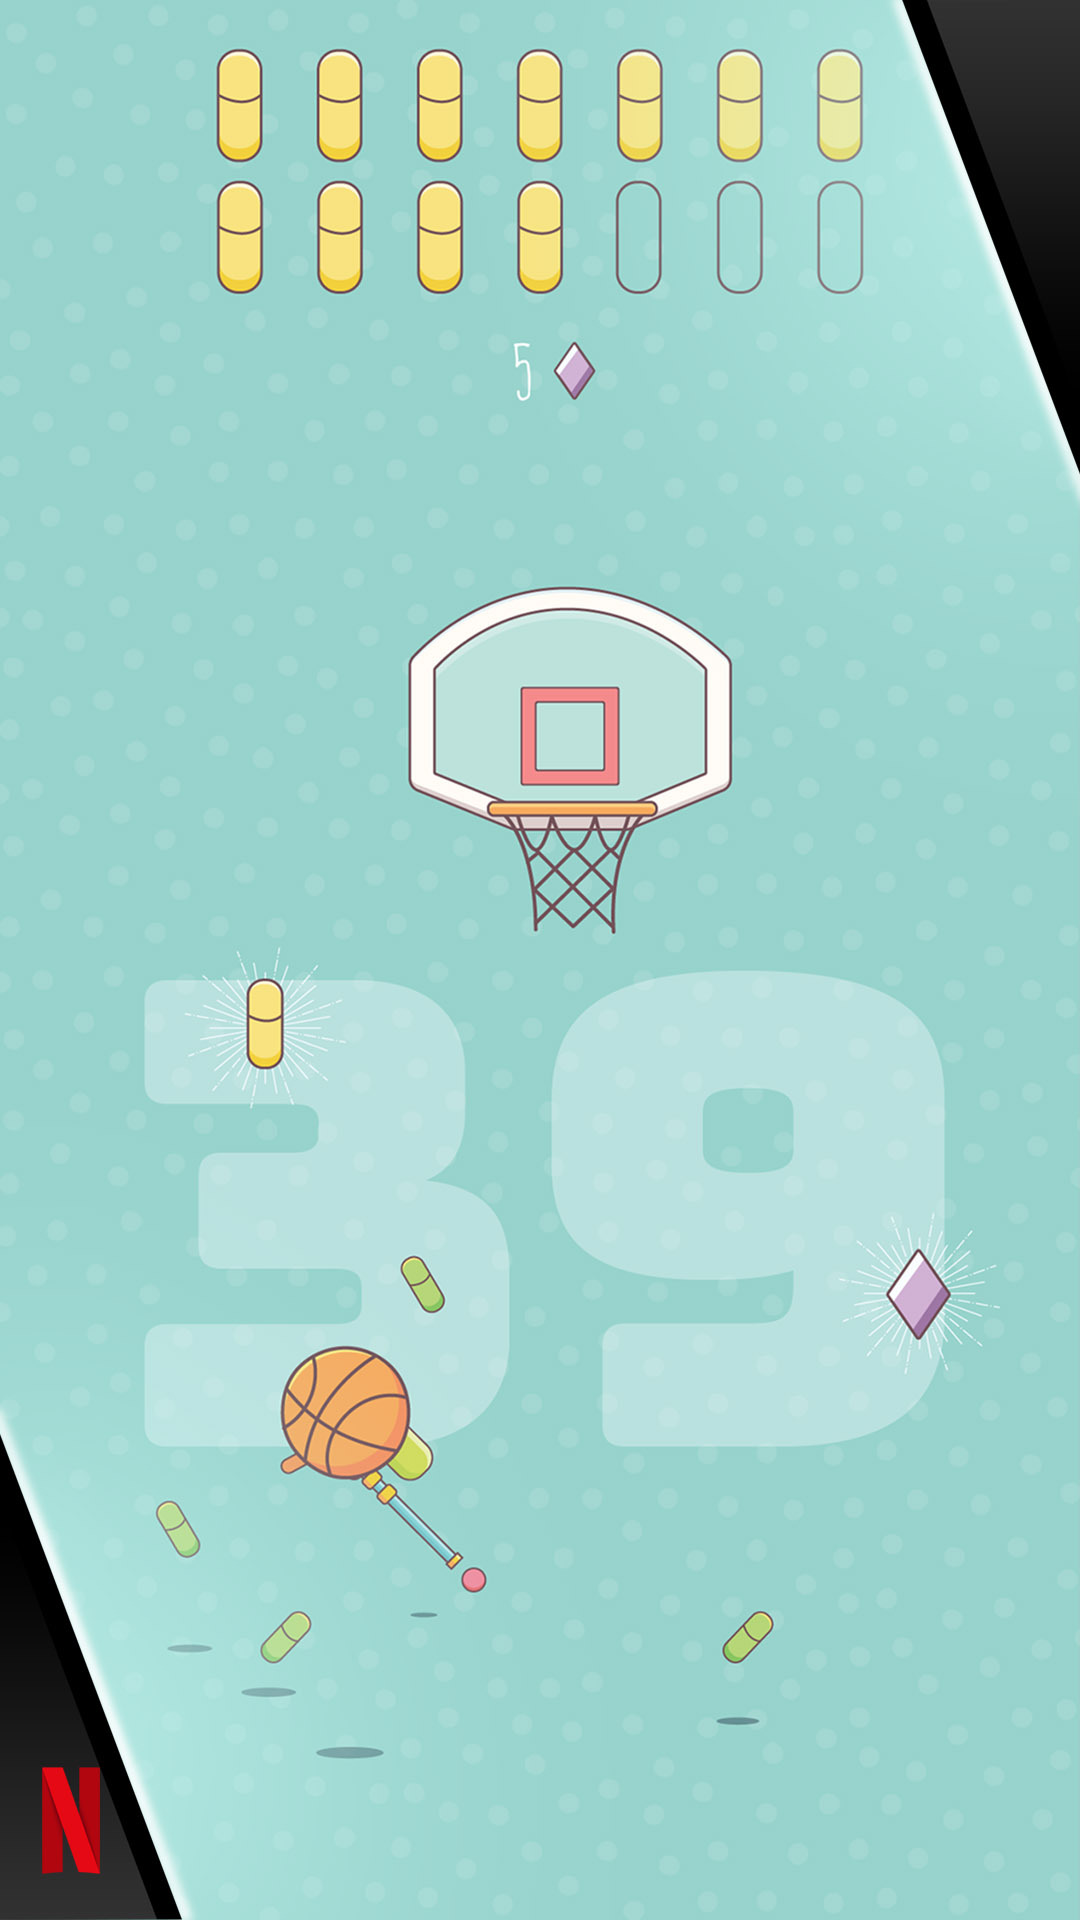 Shooting Hoops - Android game screenshots.